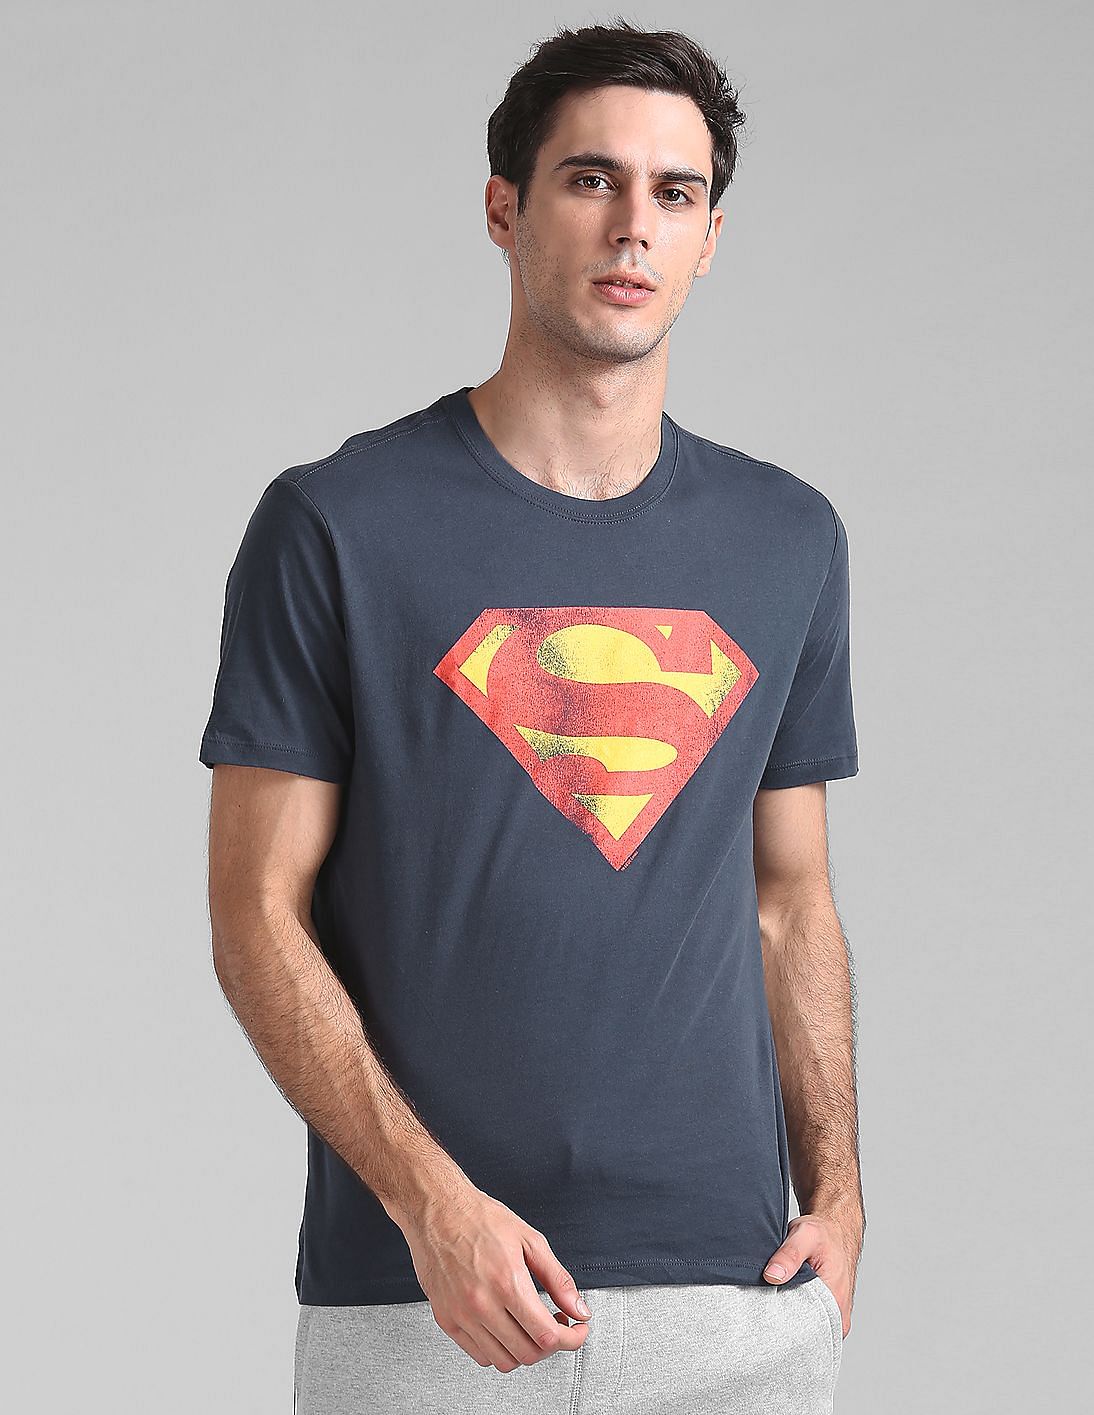 superman graphic tee